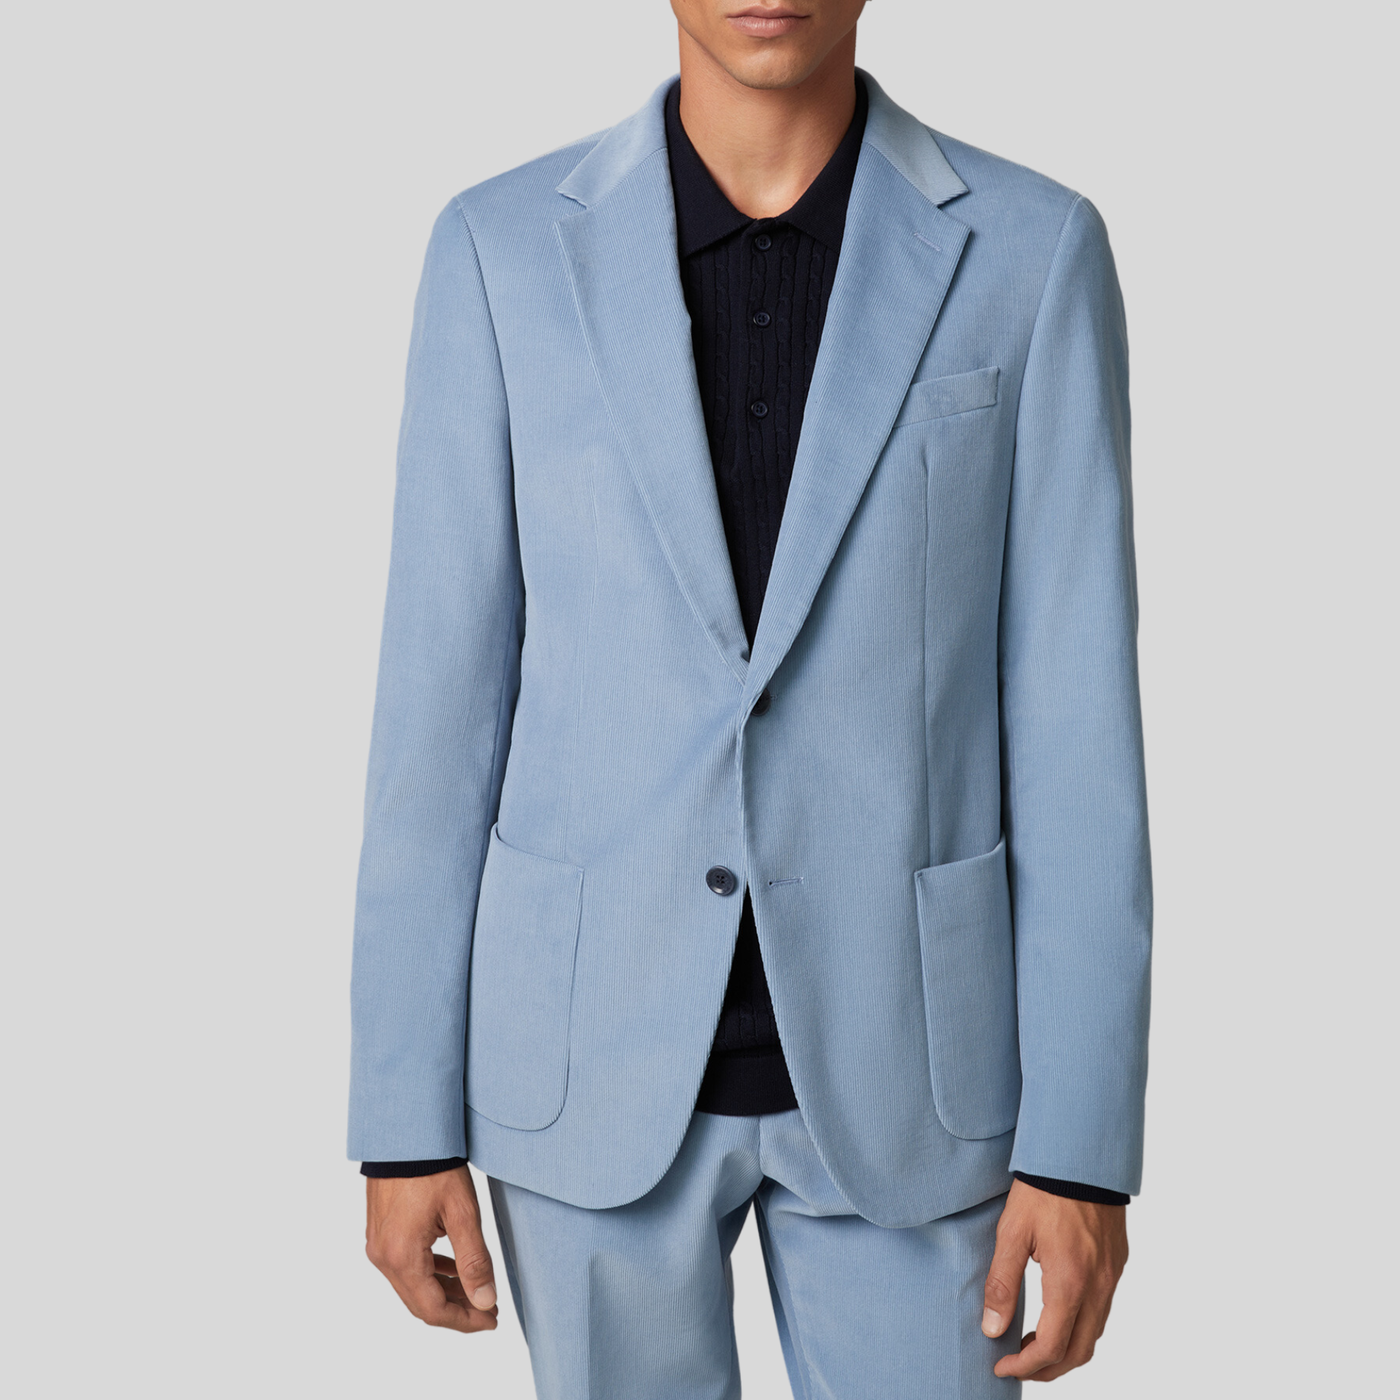 Gotstyle Fashion - Strellson Suits Patch Pocket Corduroy Jacket - Light Blue